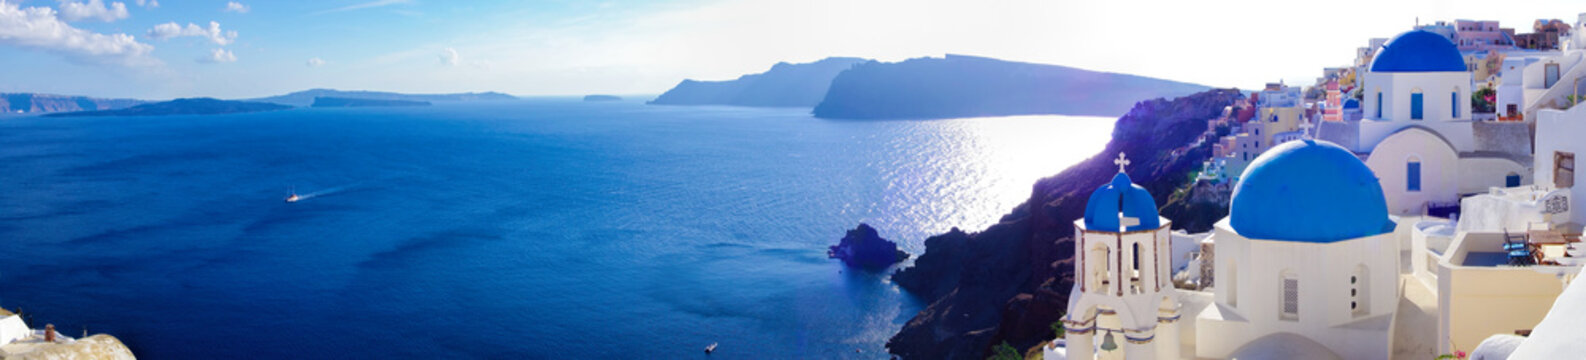 Fototapeta Panorama Oia wioska na Santorini, Grecja